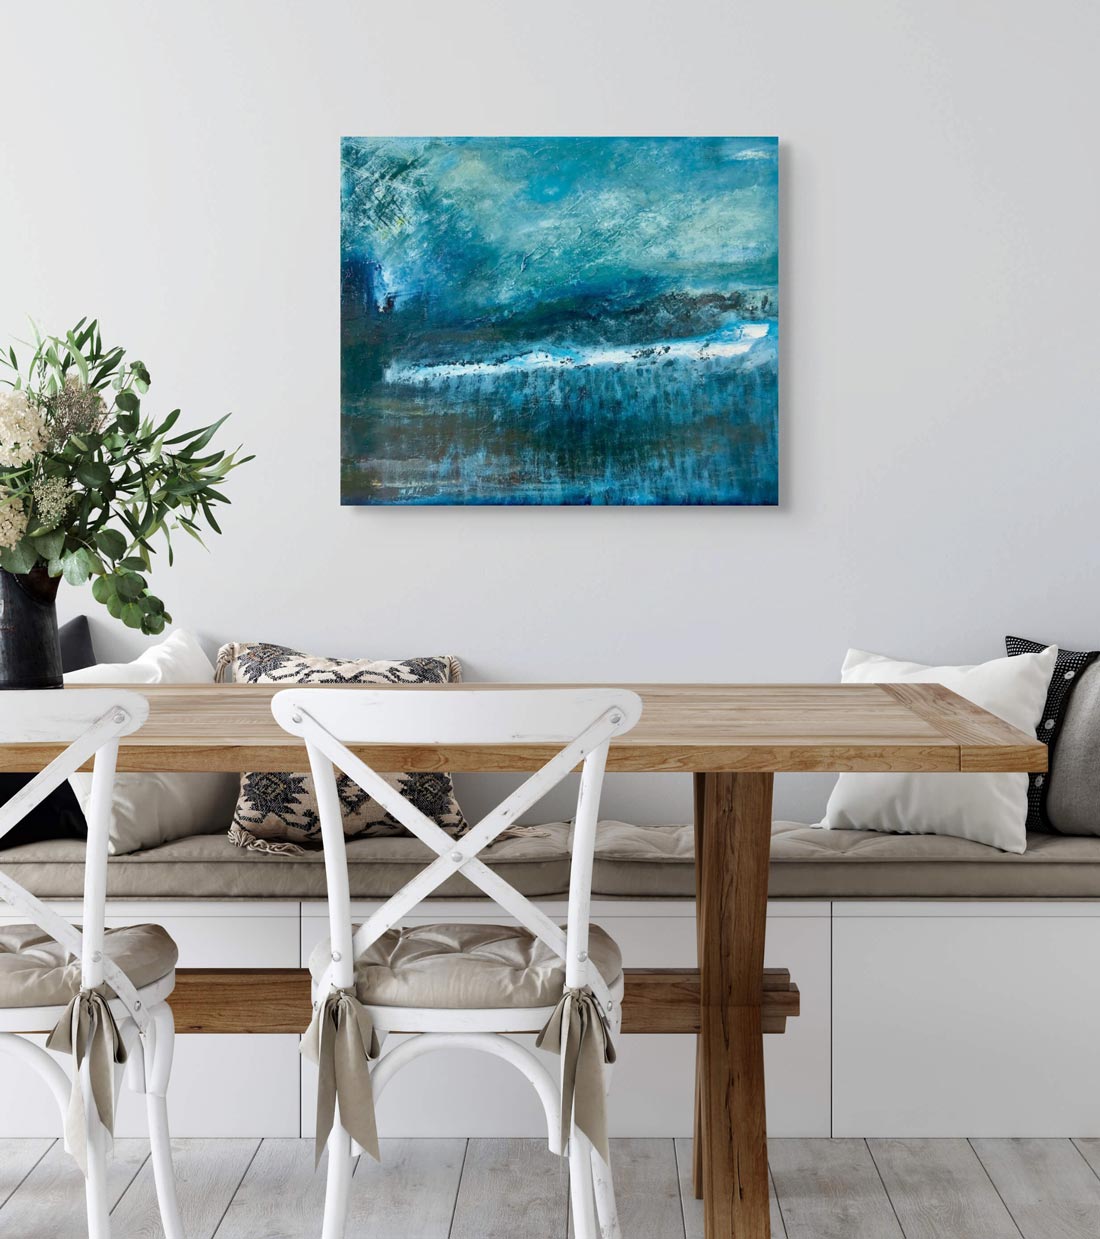 Harbour - Size: 51 x 61 cm, Medium: Oil on Canvas